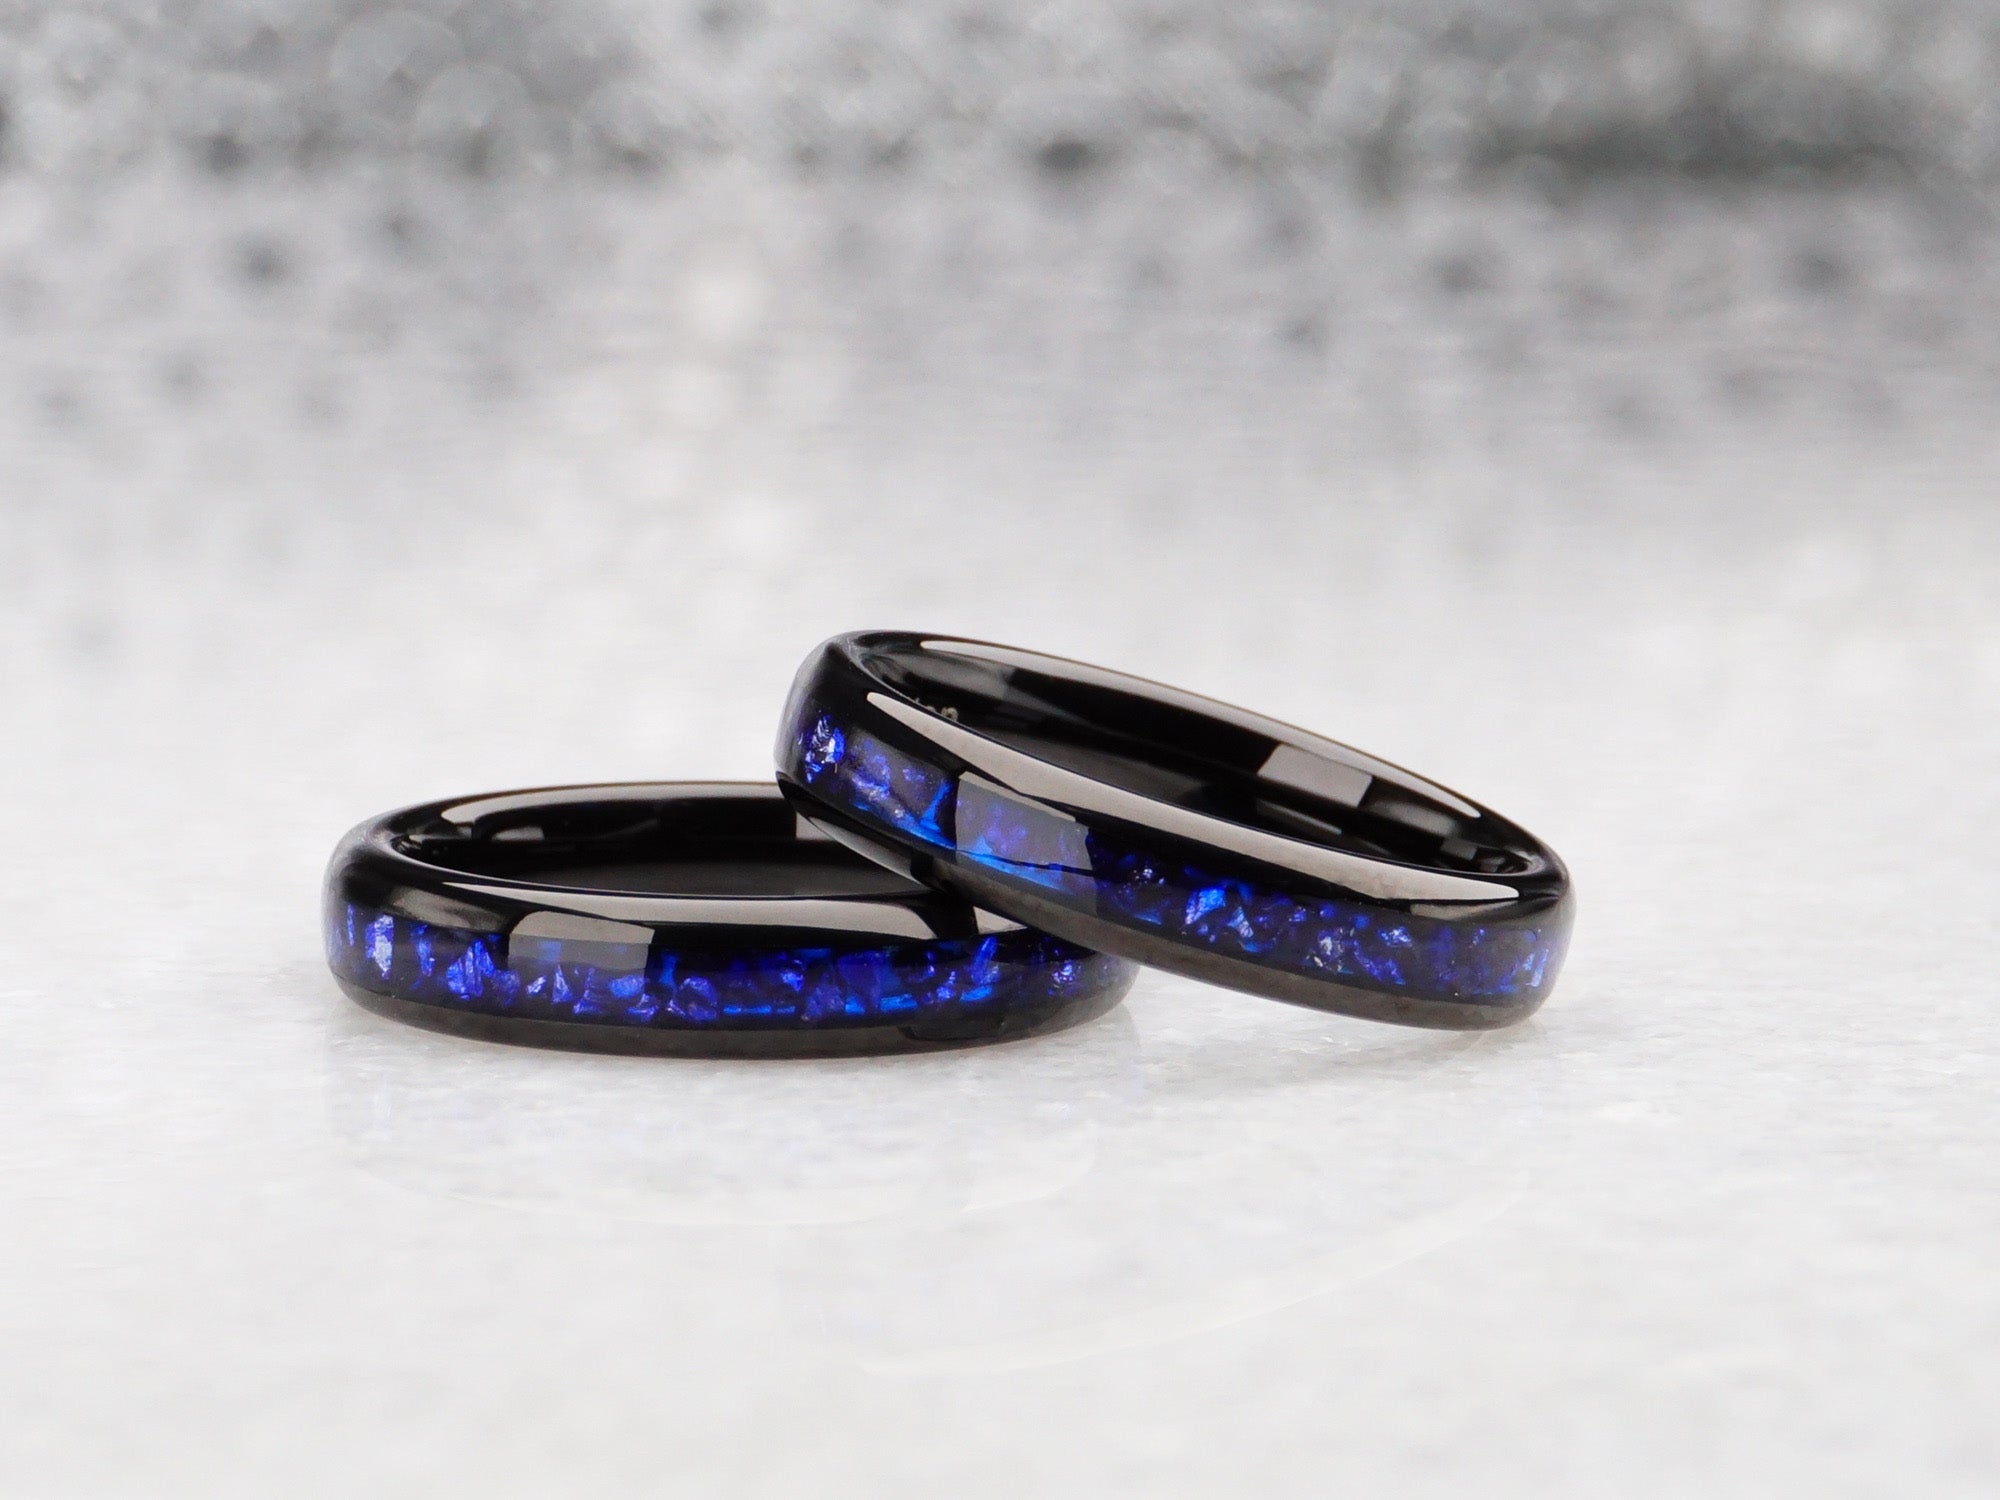 4mm blue sapphire ring, polished black tungsten ring with dark blue lab sapphire gemstone inlay, modern womens wedding band